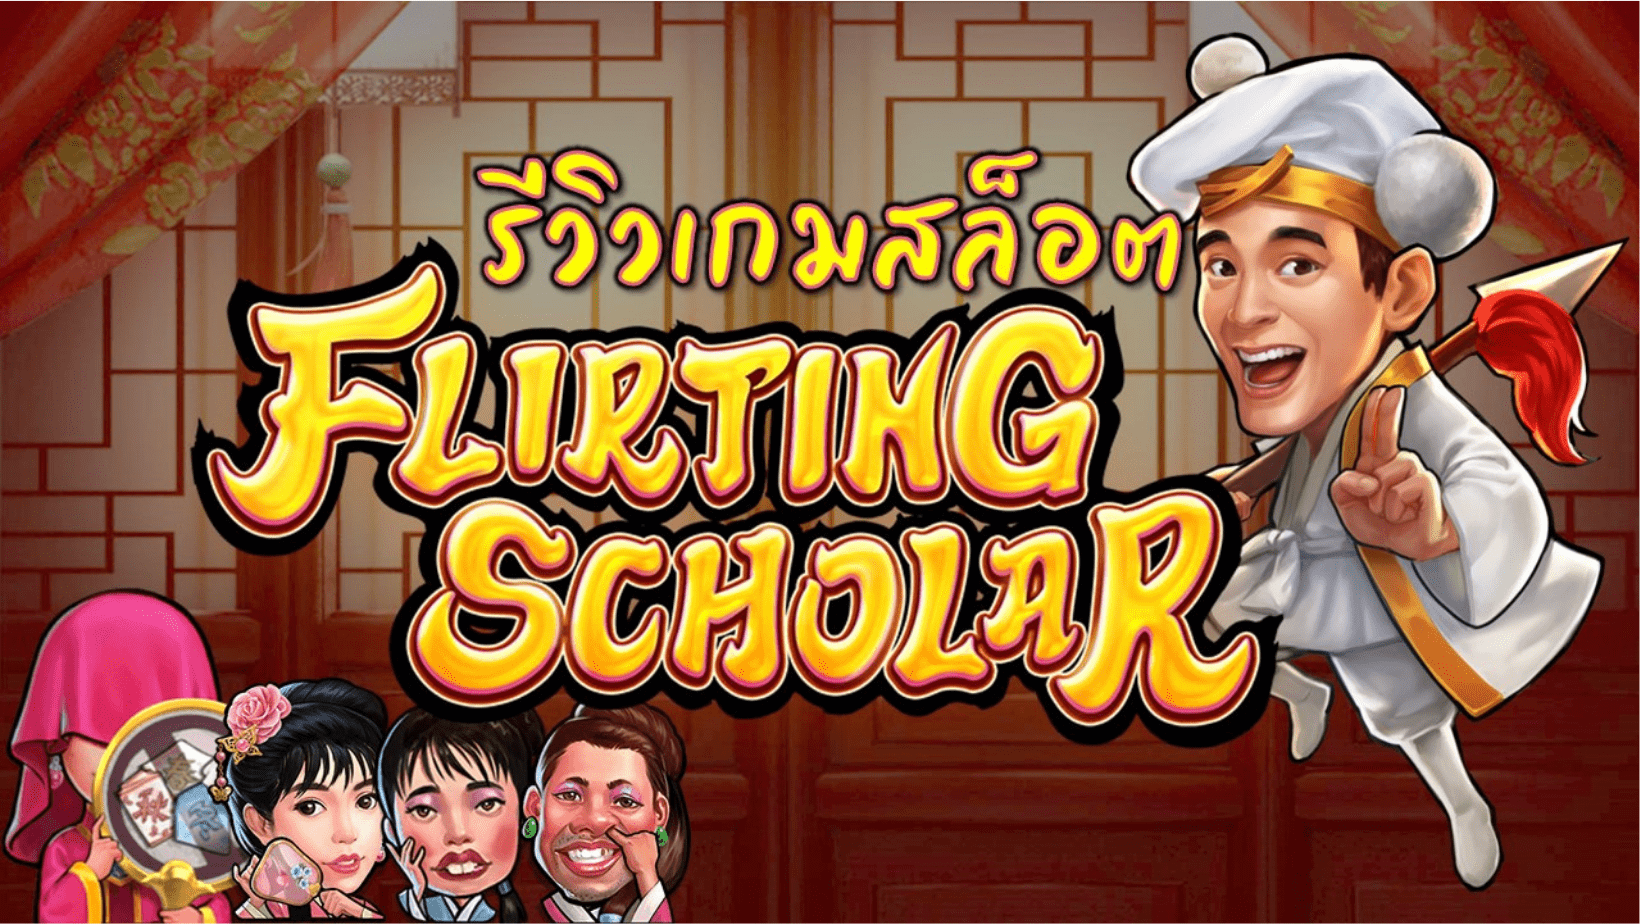 Flirting Scholar เกม นักวิชาการขี้หลี